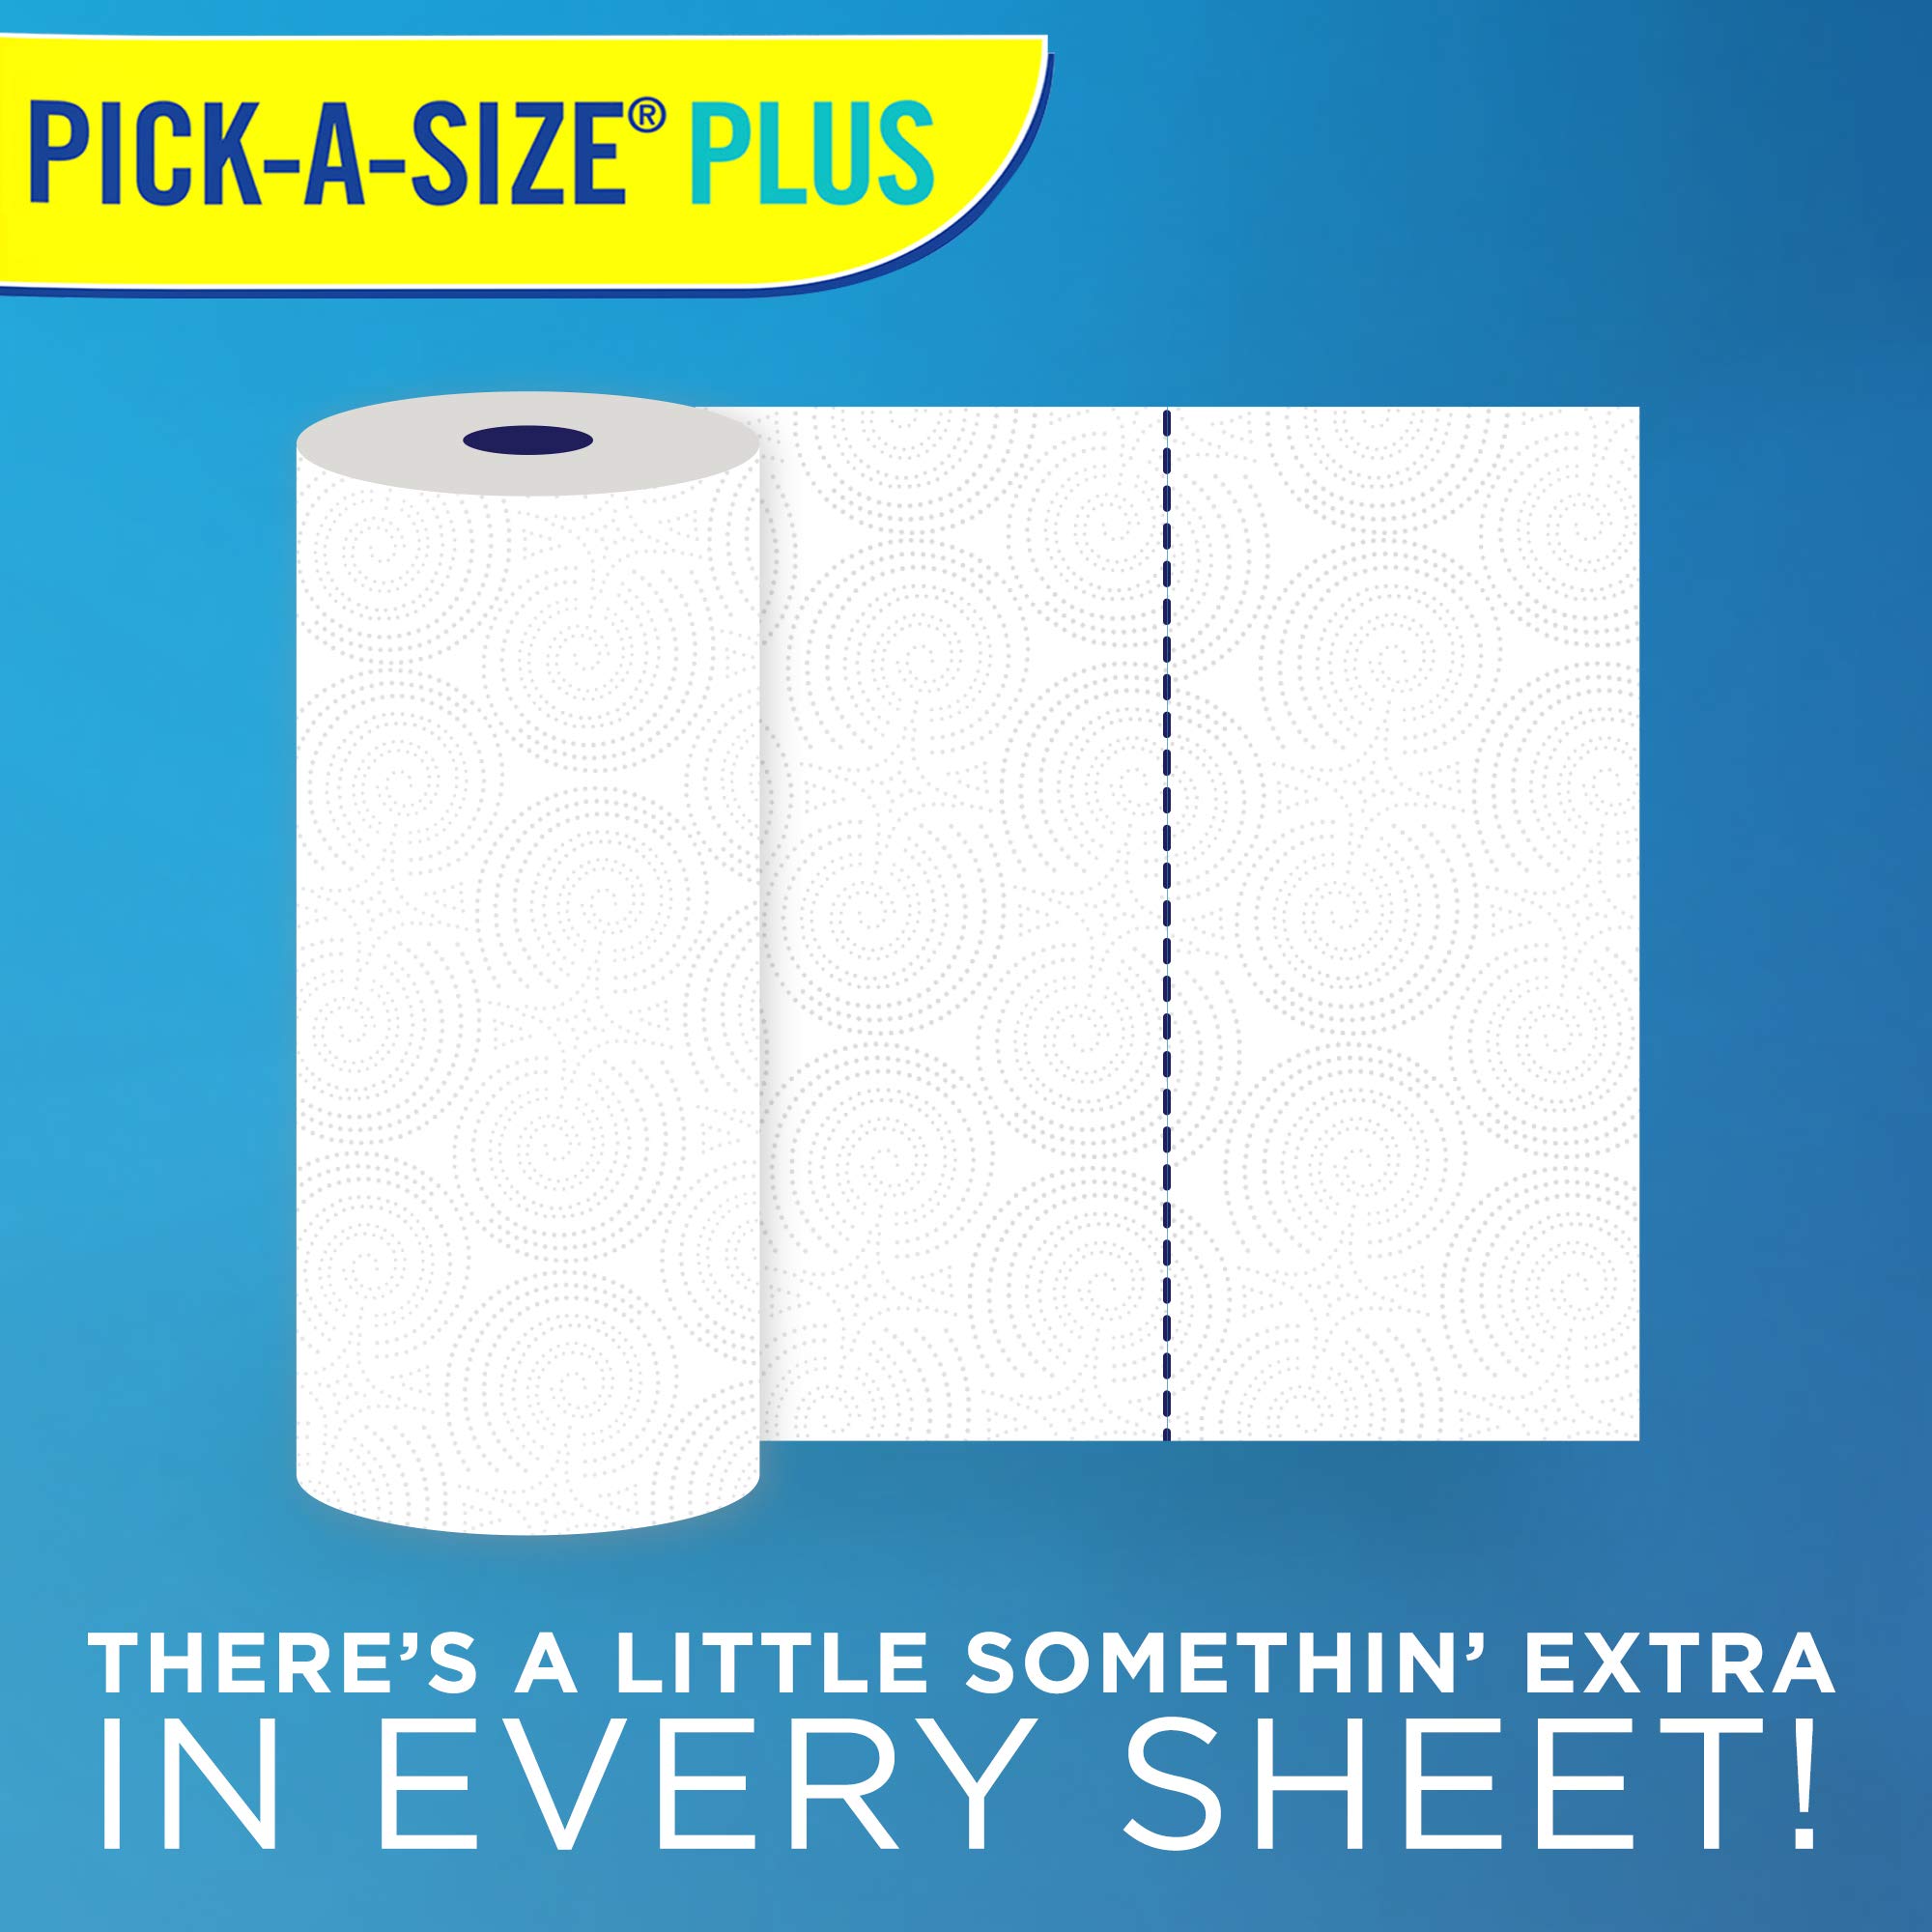 Sparkle Paper Towels, 24 = 47 Regular Rolls, Modern White, Pick-a-Size Plus